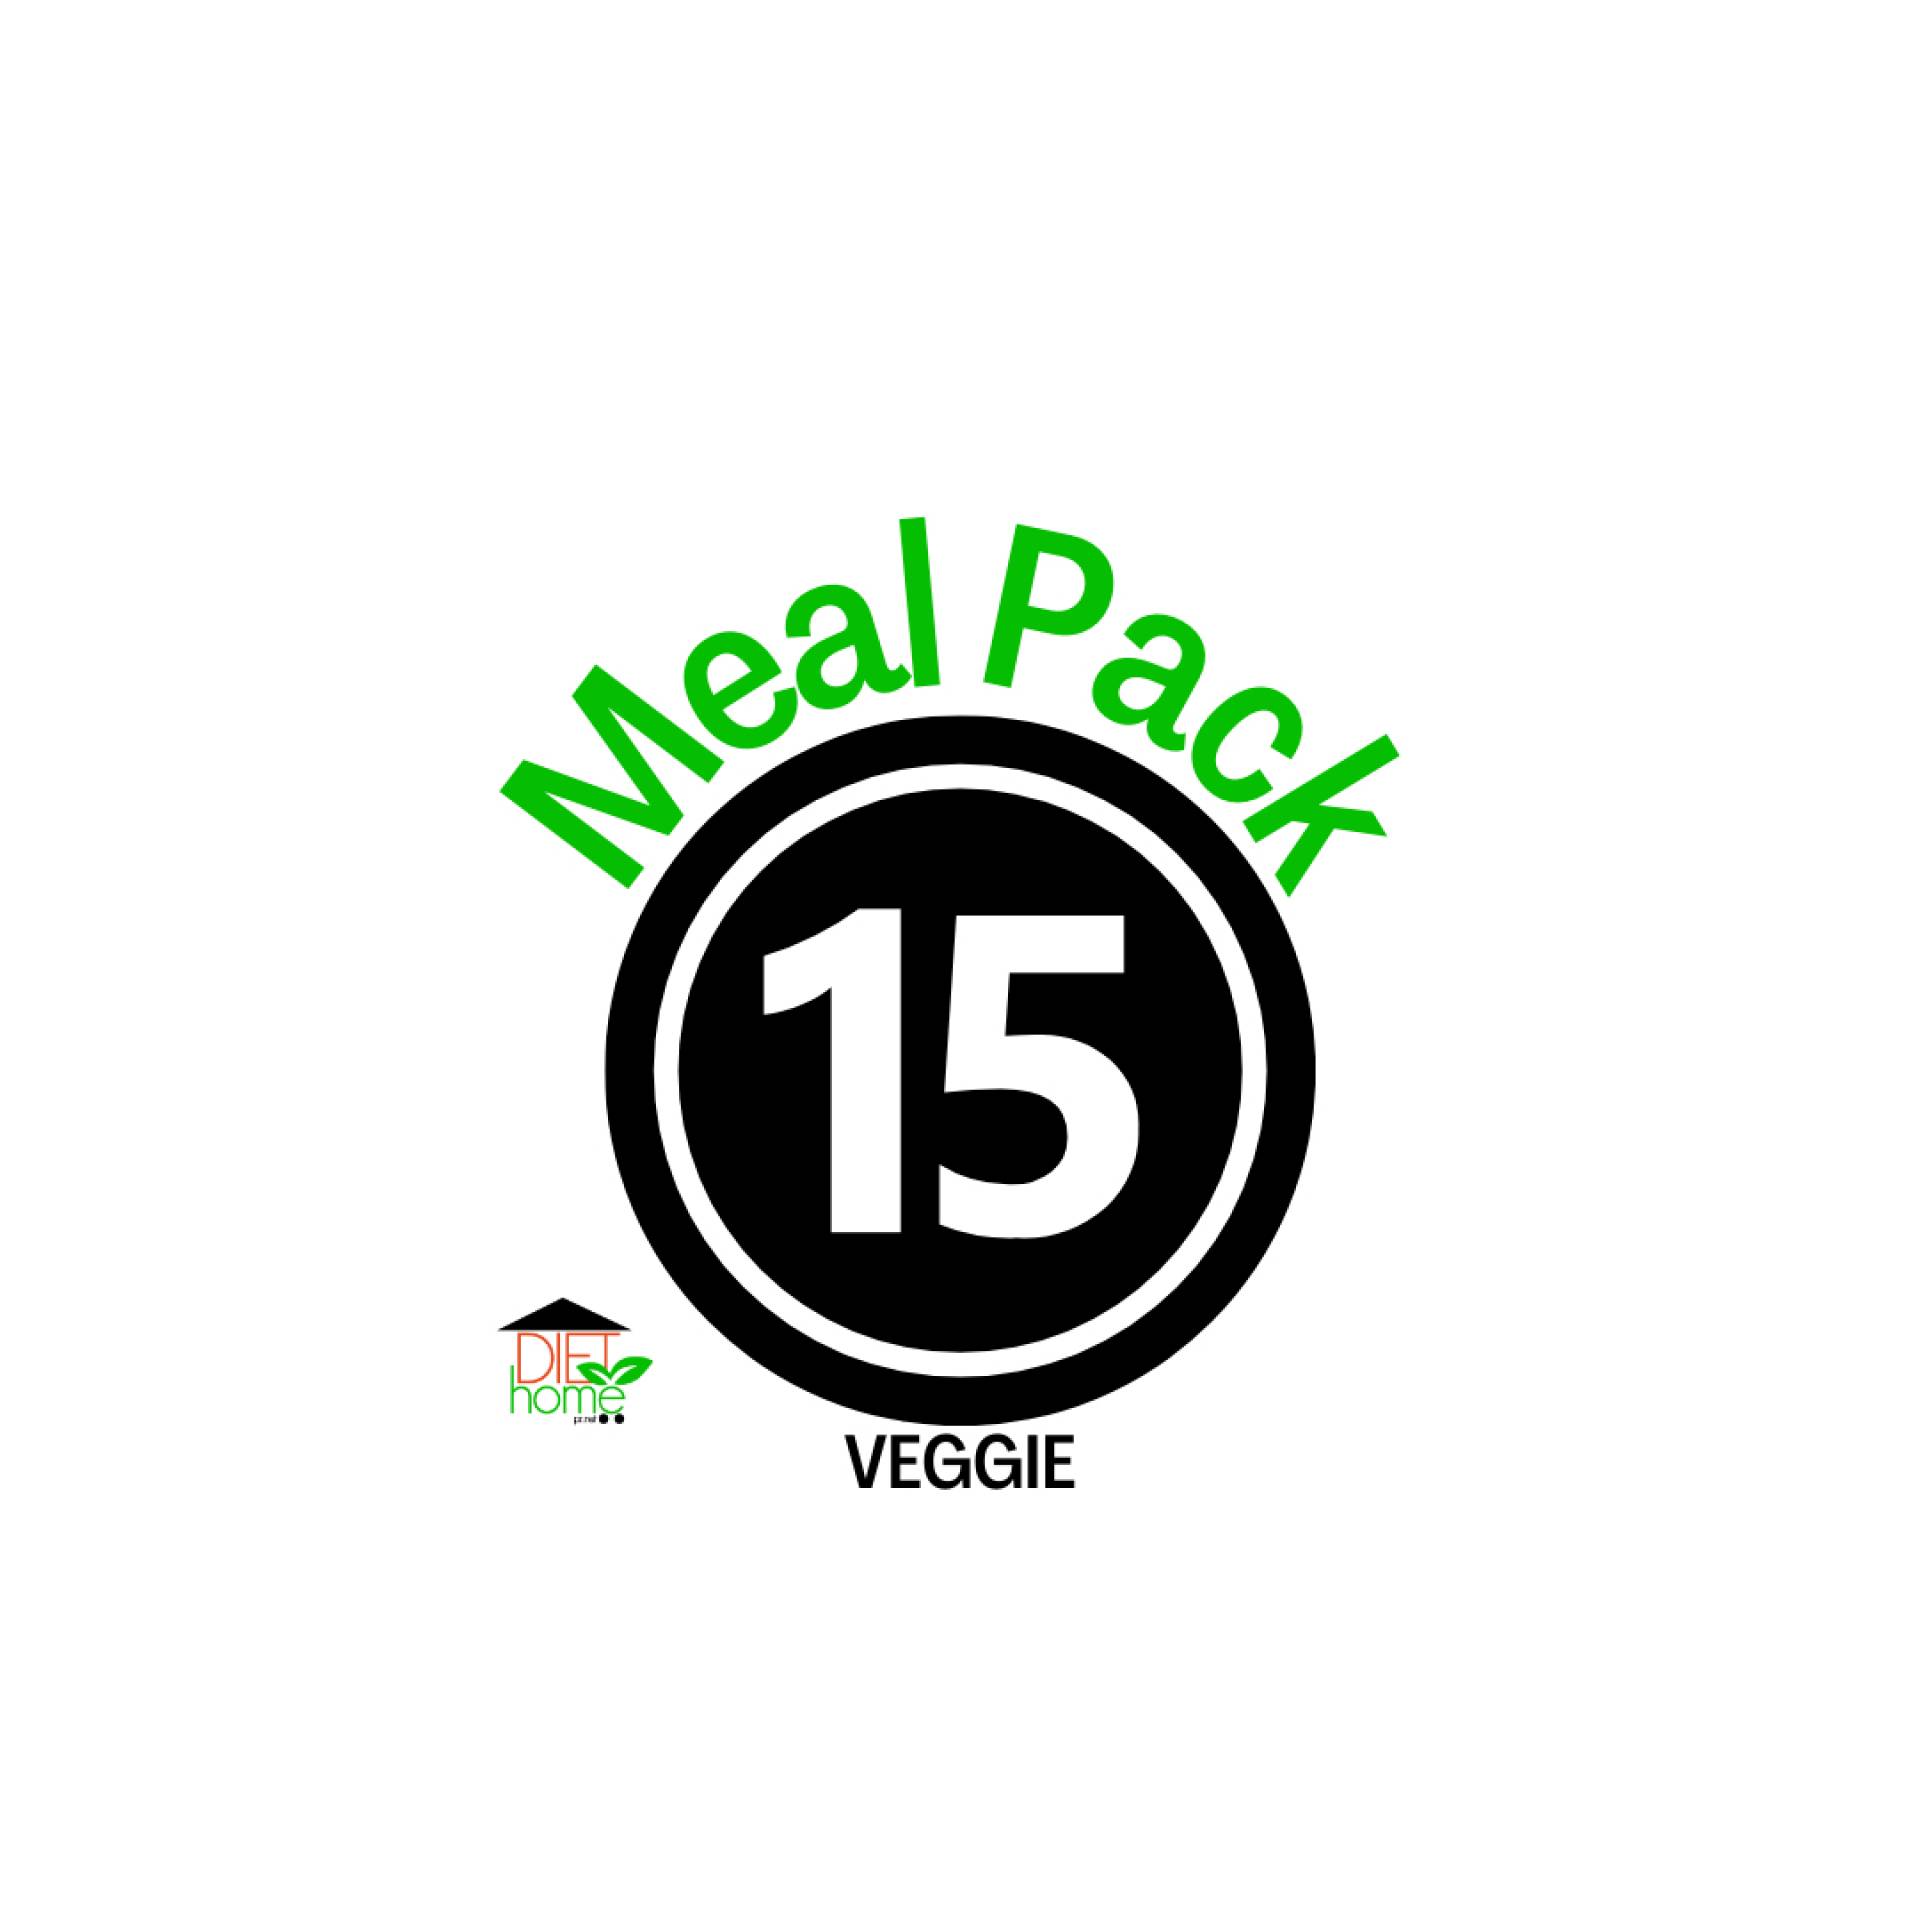 *15 Meak Pack Veggie